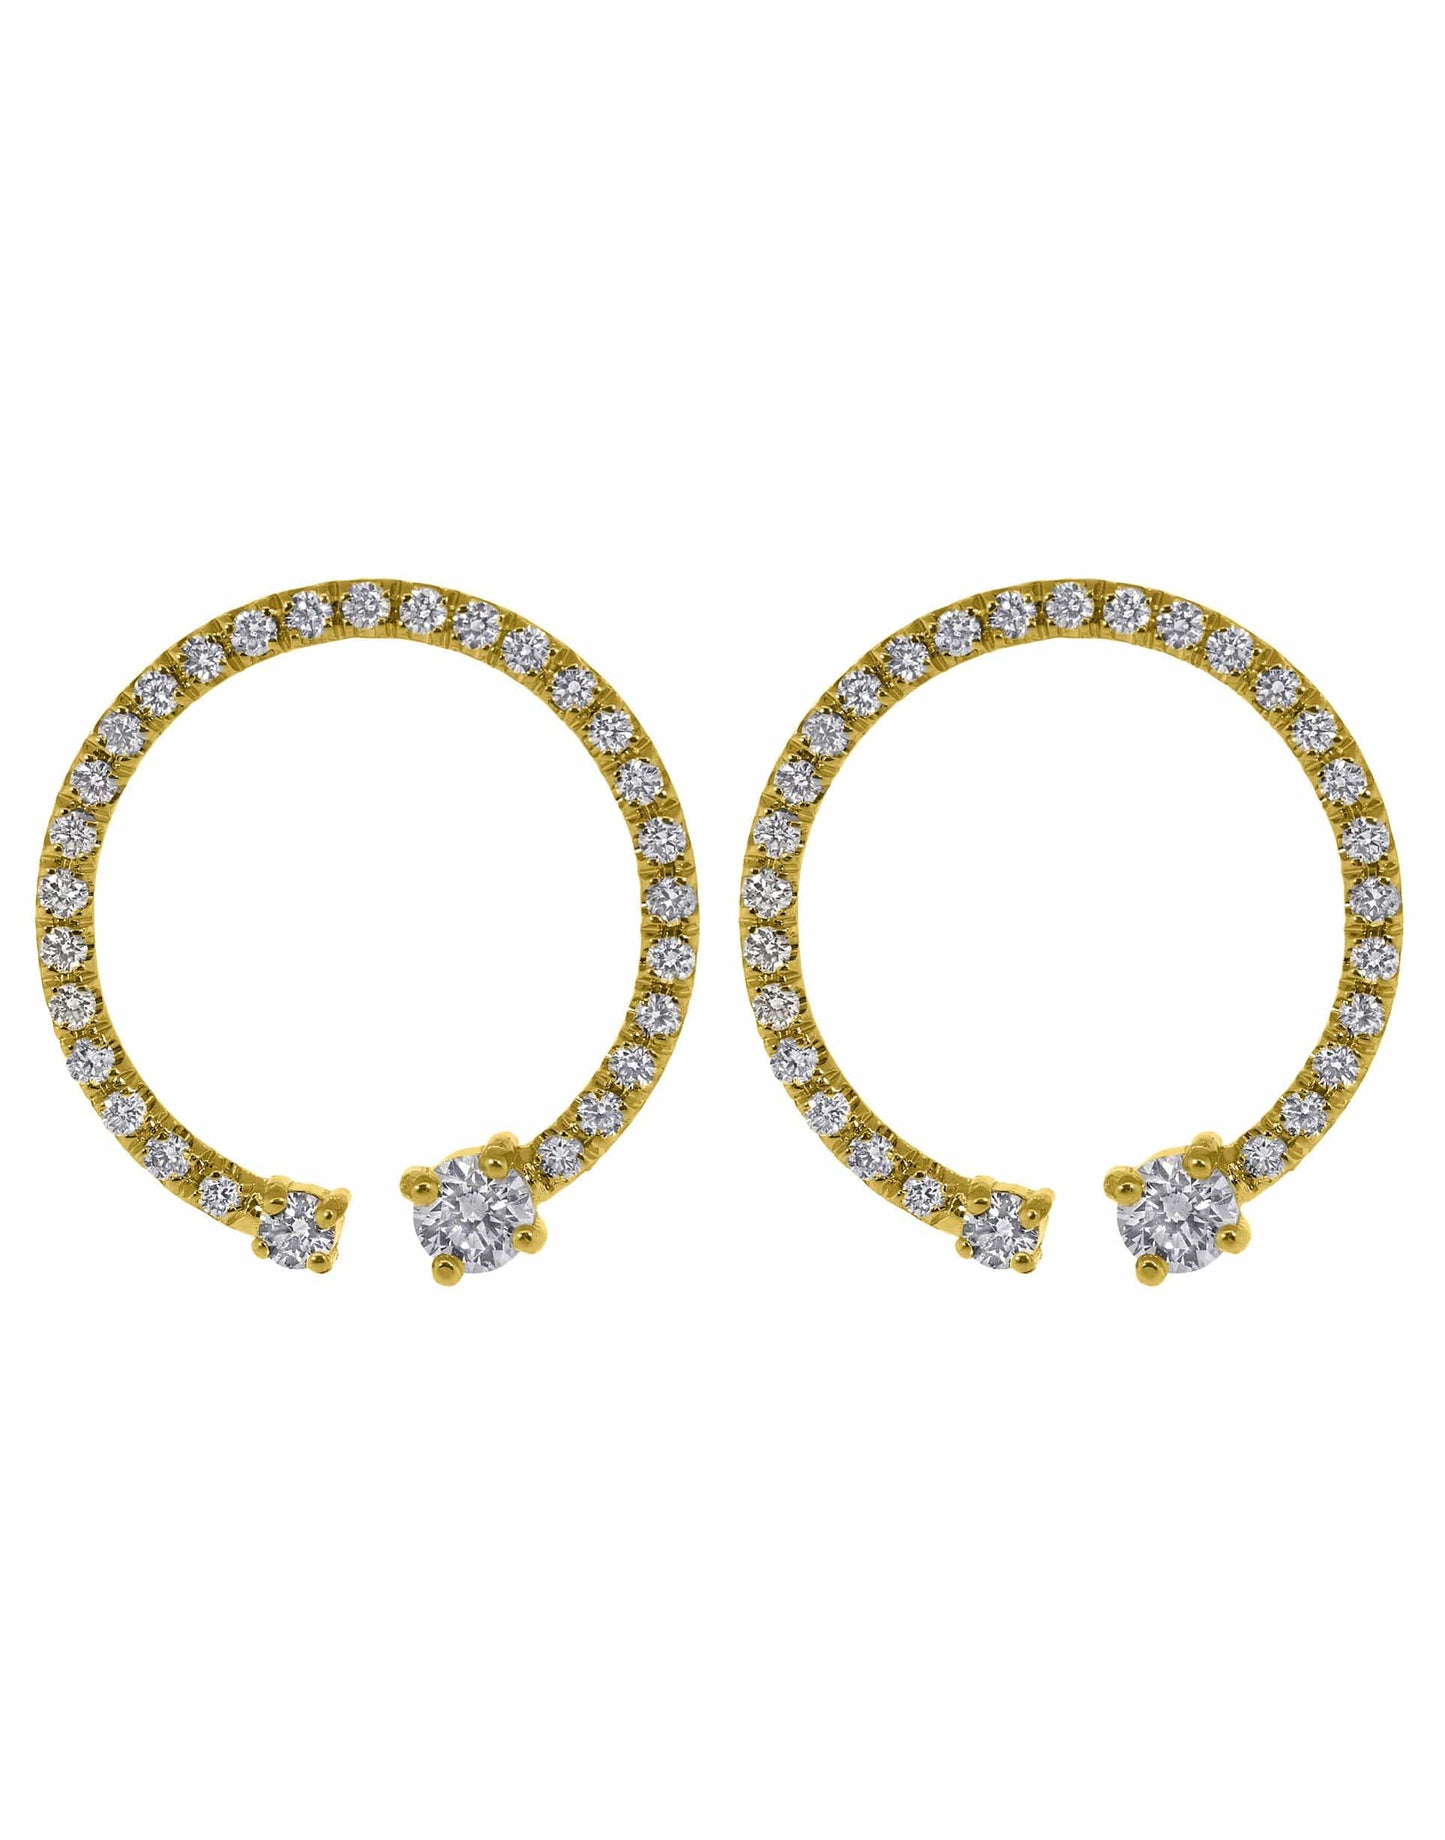 KATKIM-Lorraine Pave Diamond Earrings-YELLOW GOLD